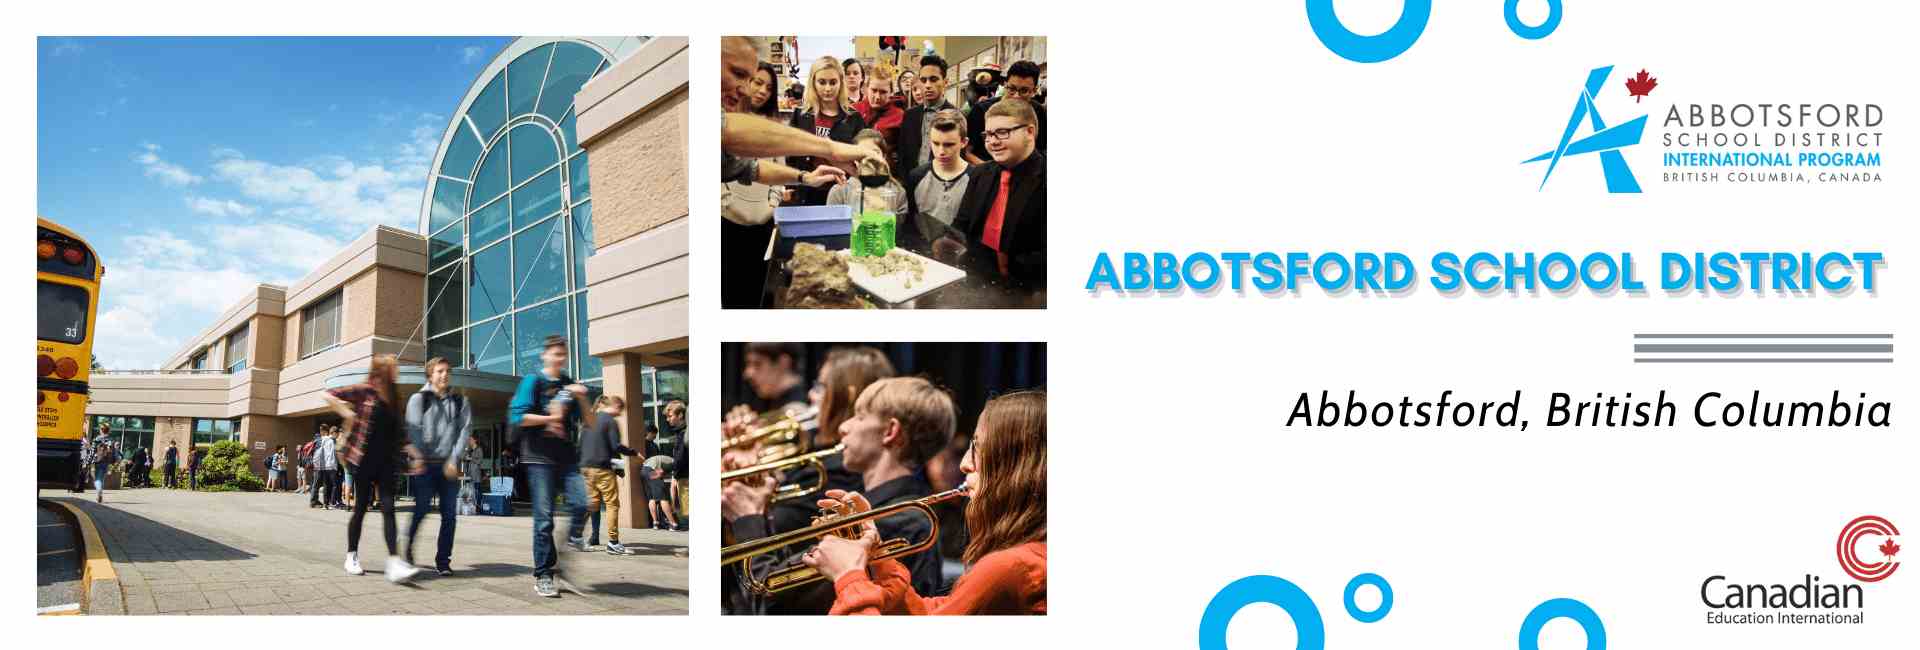 Abbotsford School District